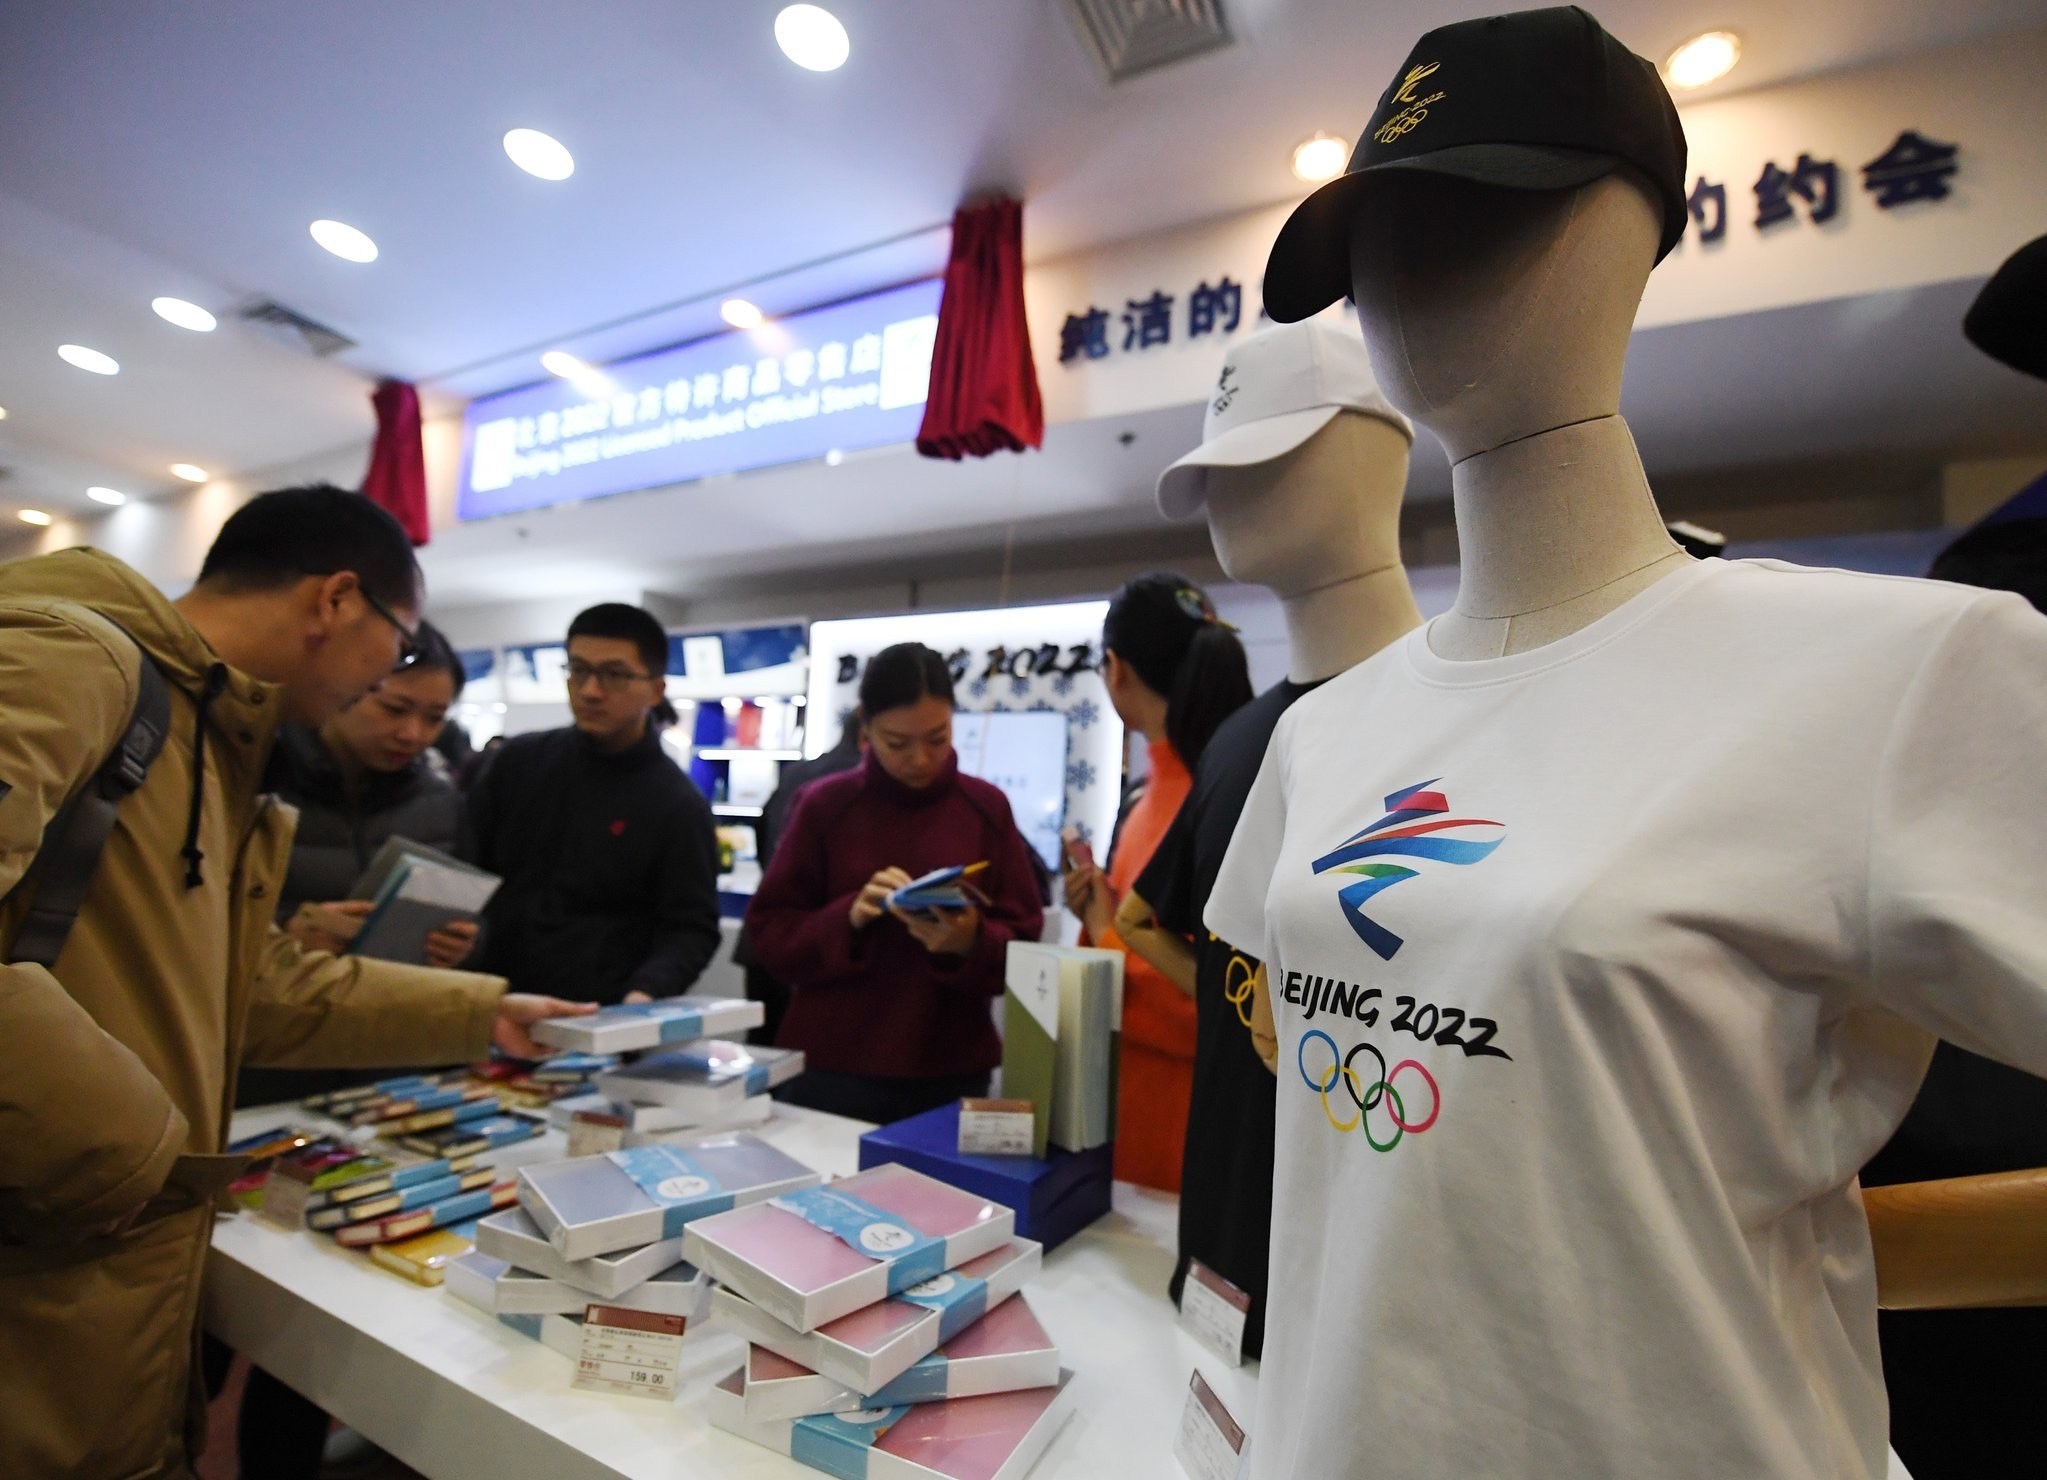 Beijing 2022 open first batch of official merchandise stores